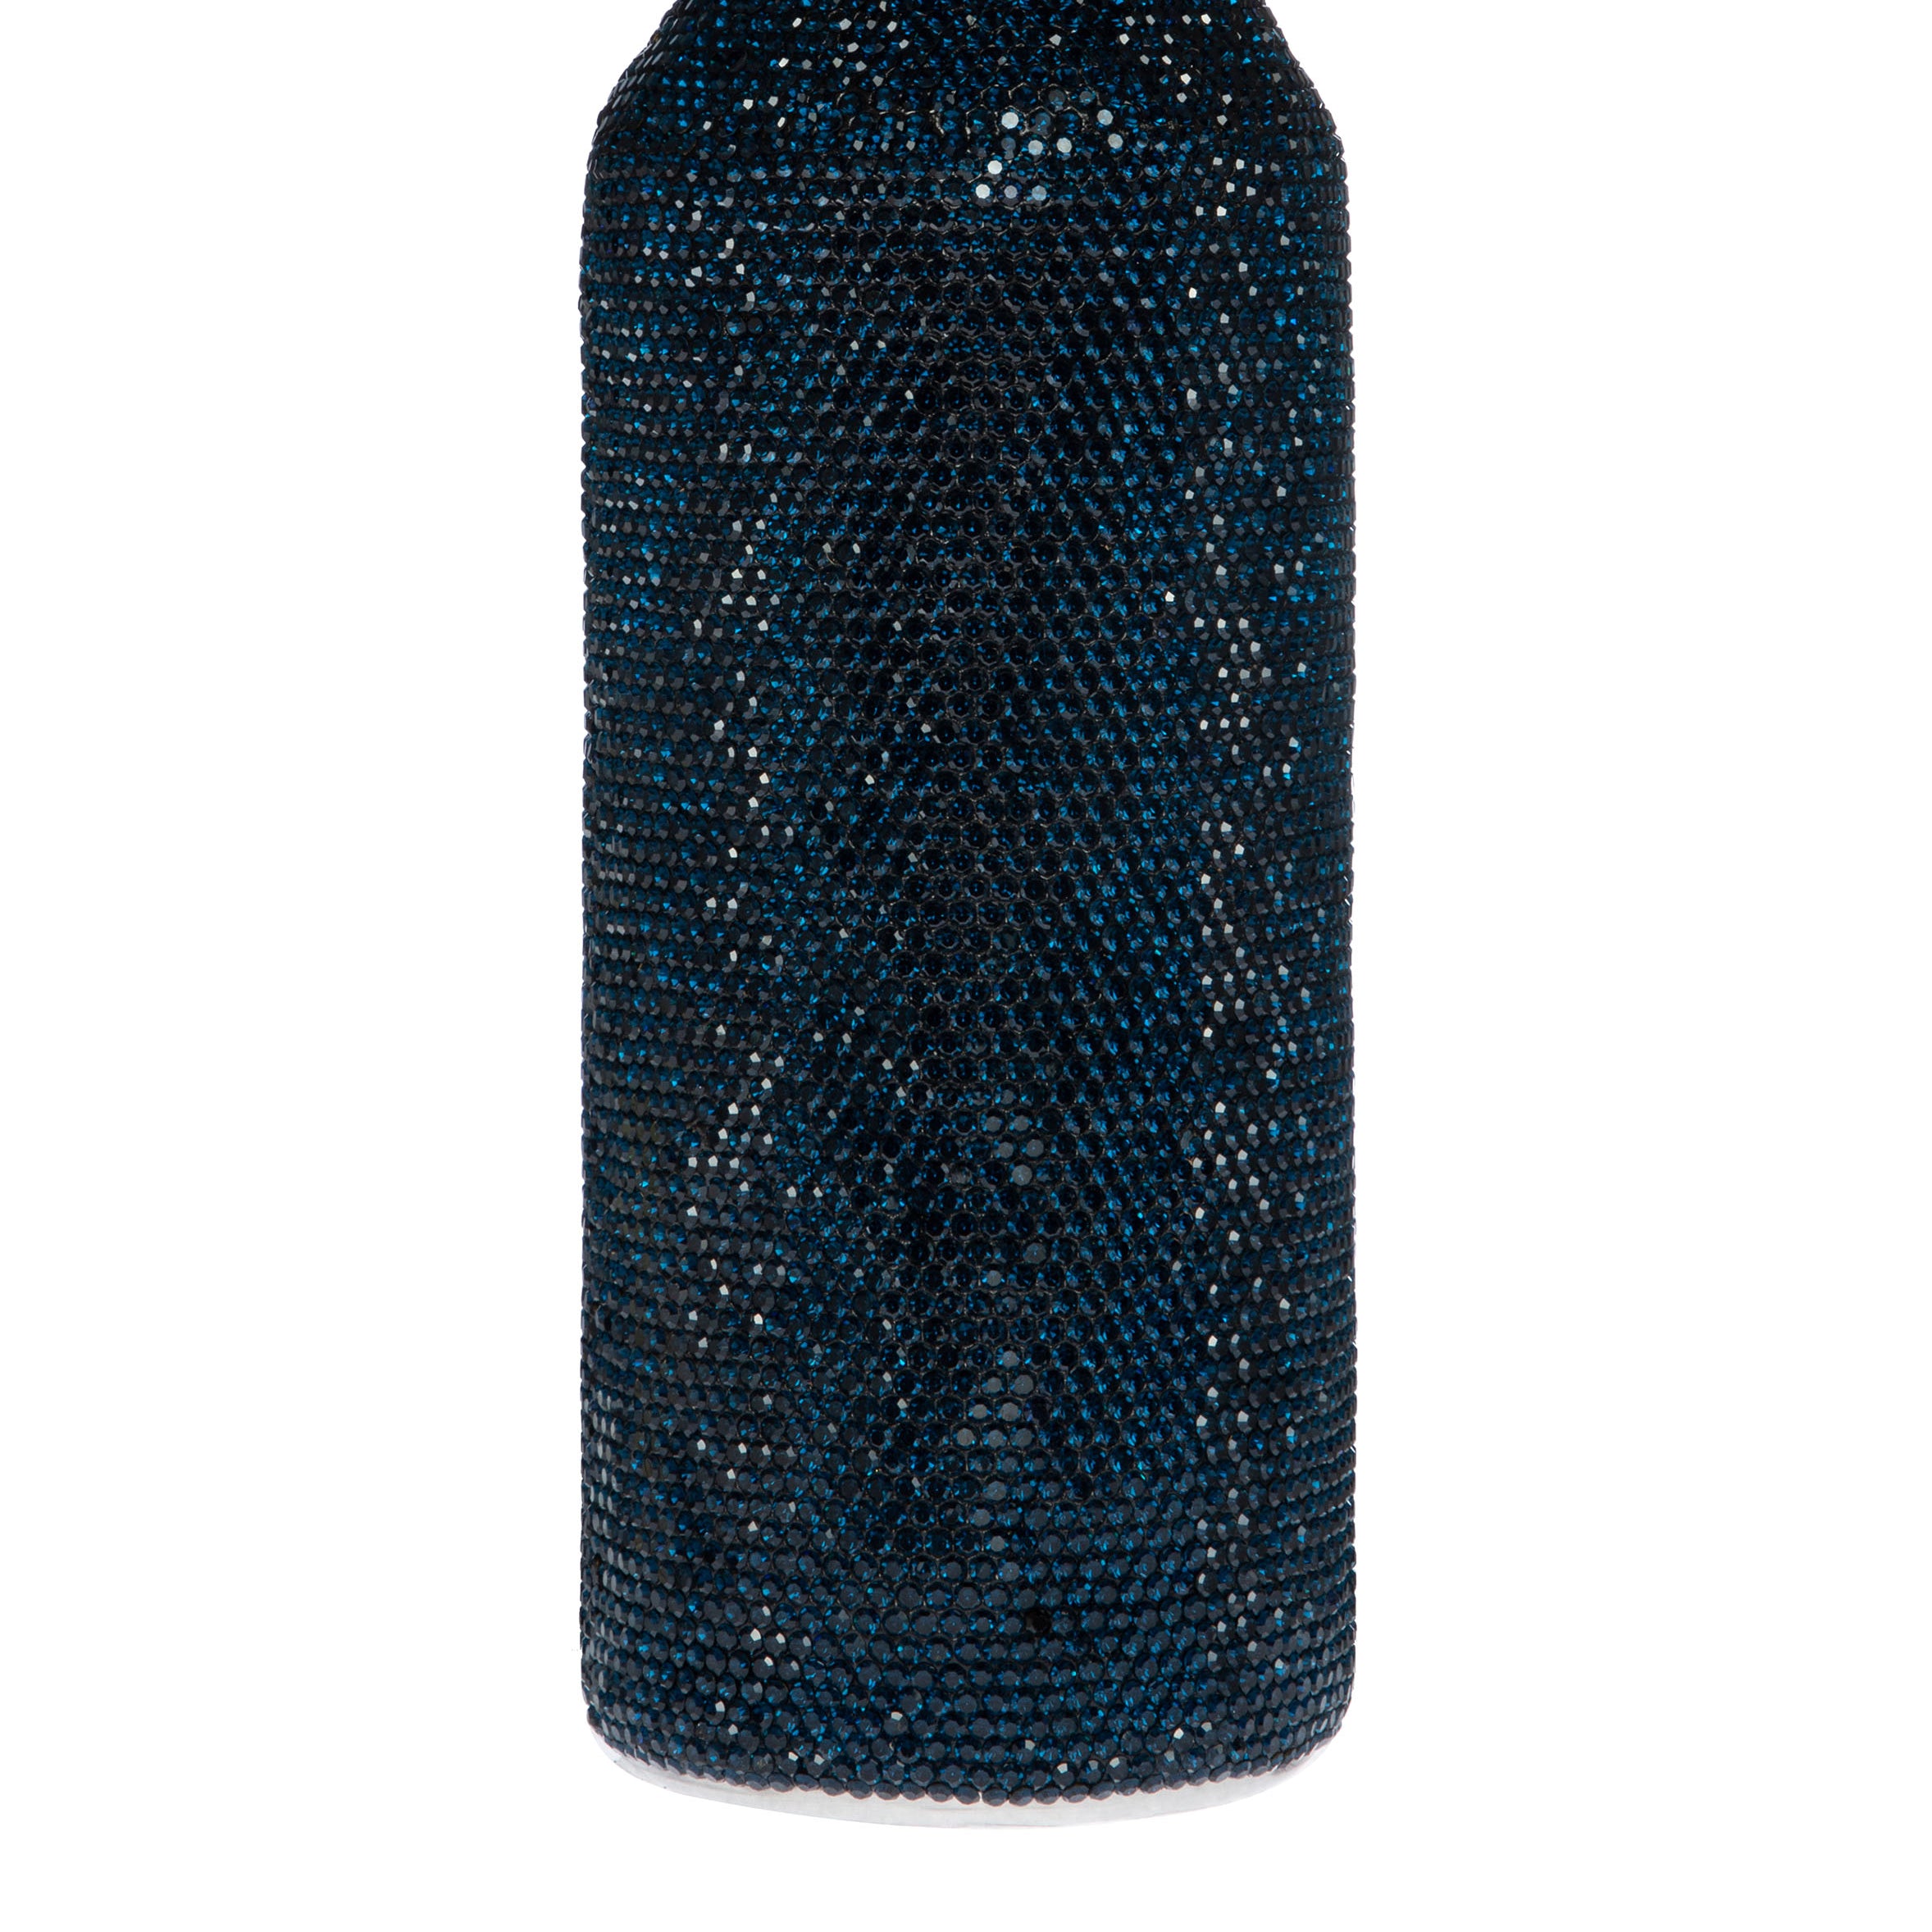 Handmade Rhinestone 500ML Thermo Bottle MIS0928